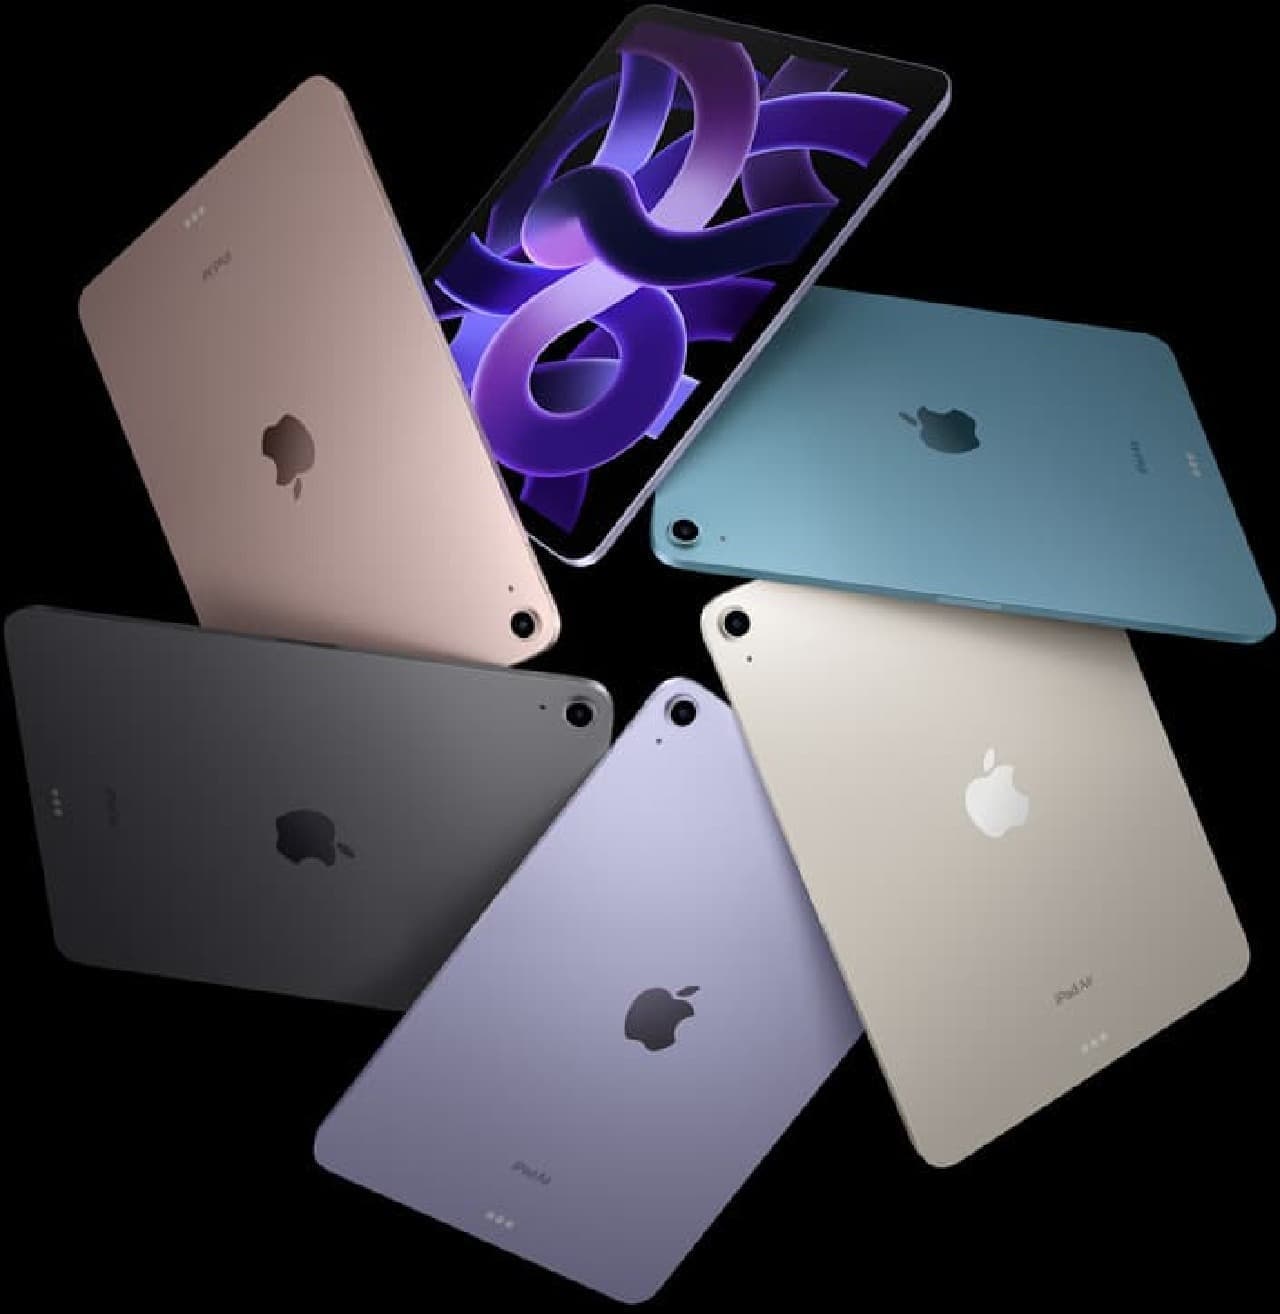 「Apple iPad Air」商品画像